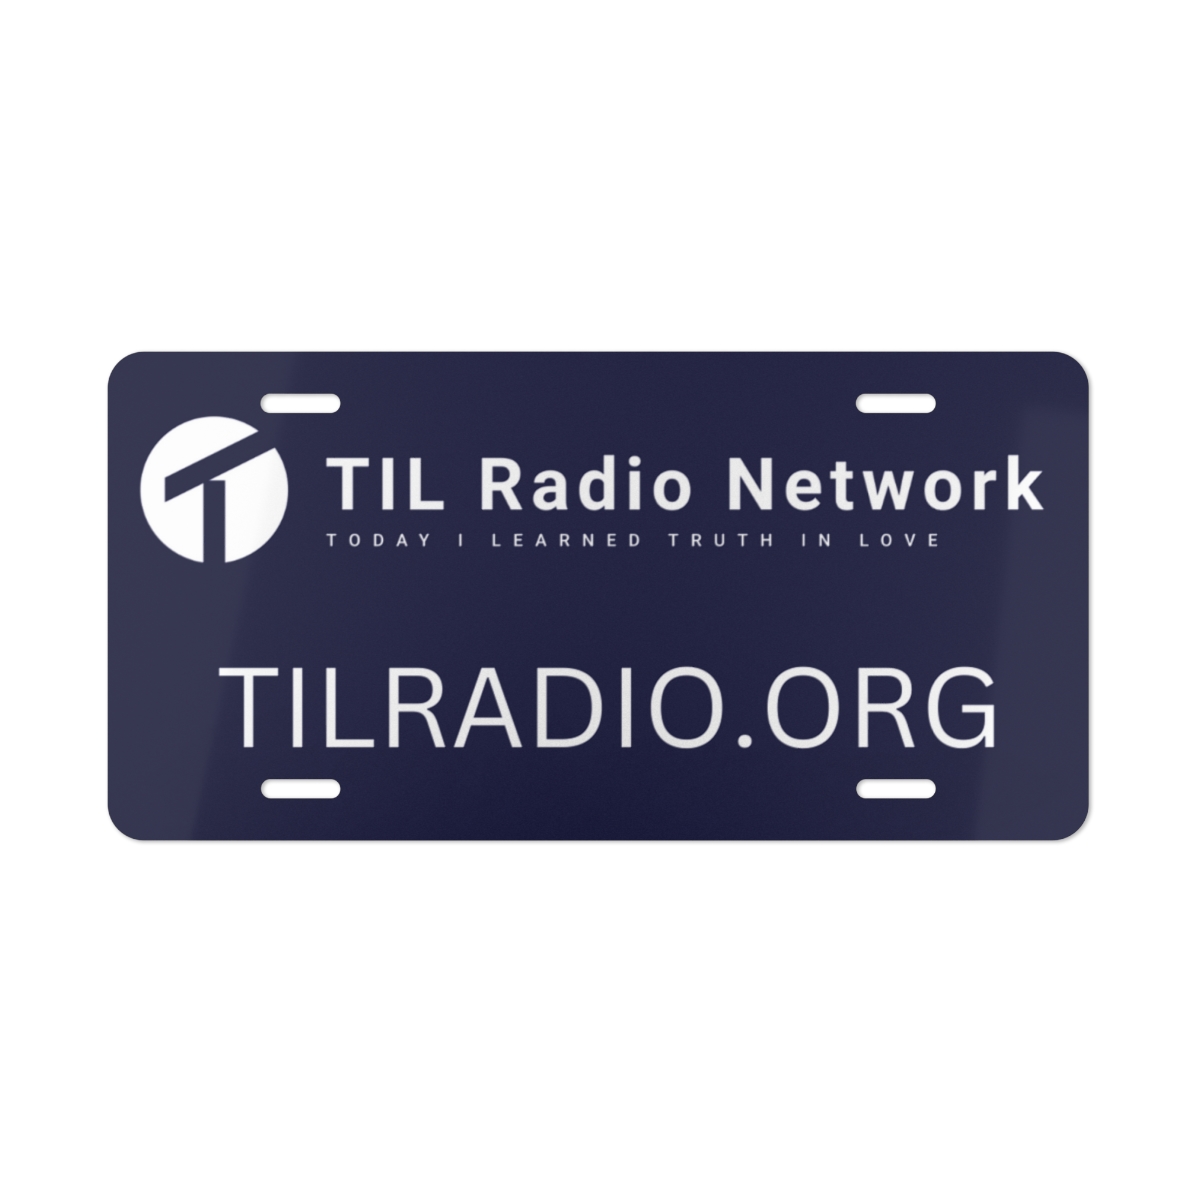 TIL Radio License Plate product thumbnail image